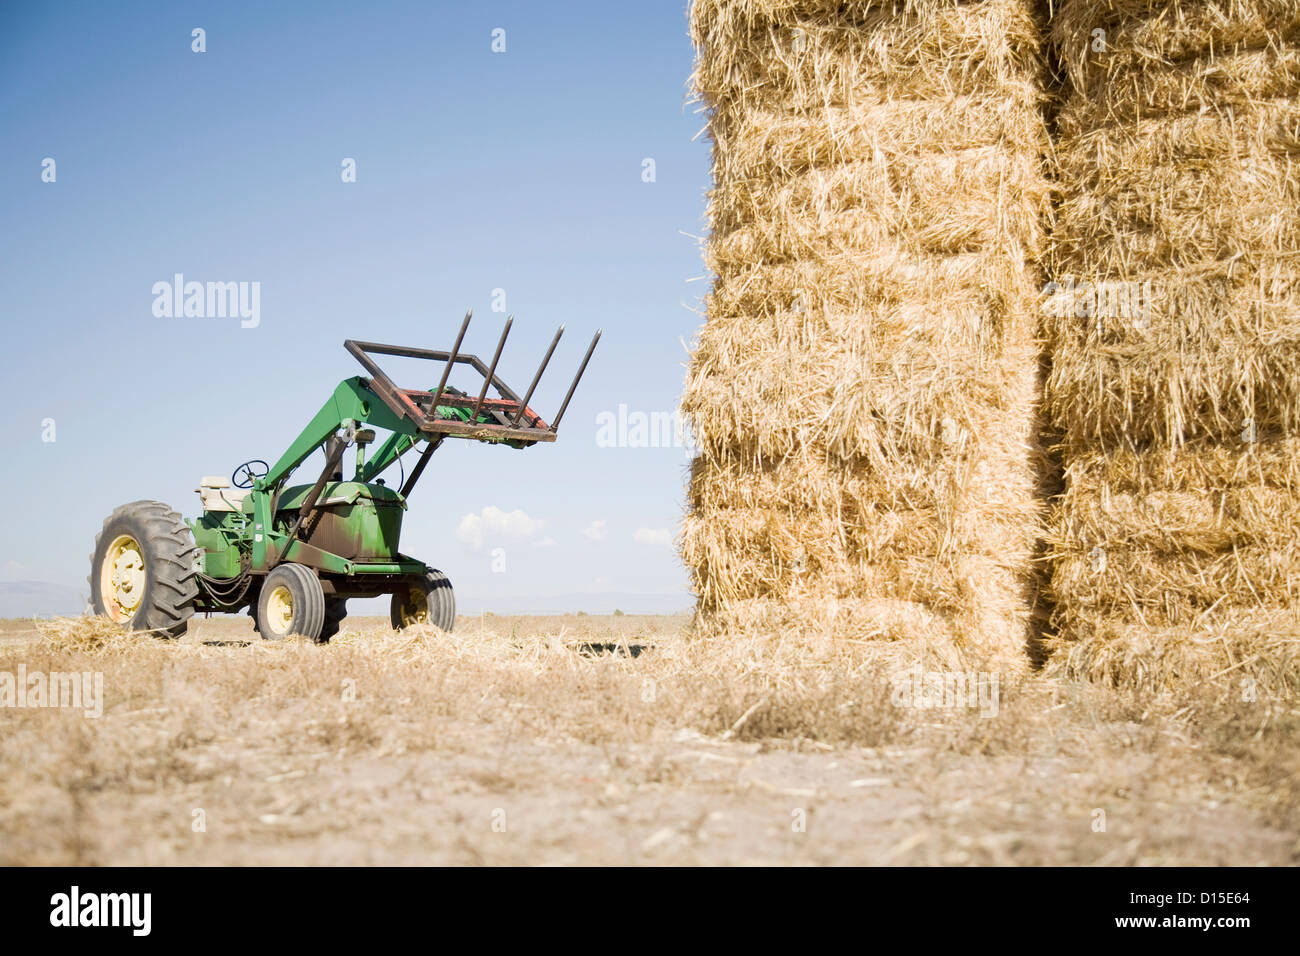 USA, Colorado, Tractor next to pile of hay Stock Photo